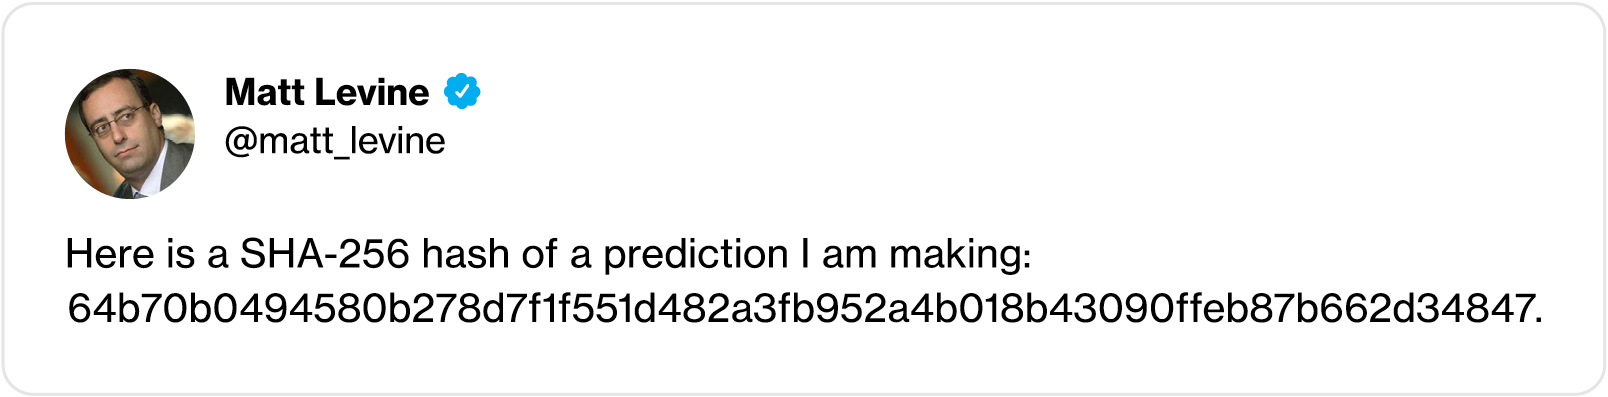 Matt Levine’s tweet “Here is a SHA-256 hash of a prediction I am making: 64b70b0494580b278d7f1f551d482a3fb952a4b018b43090ffeb87b662d34847.”